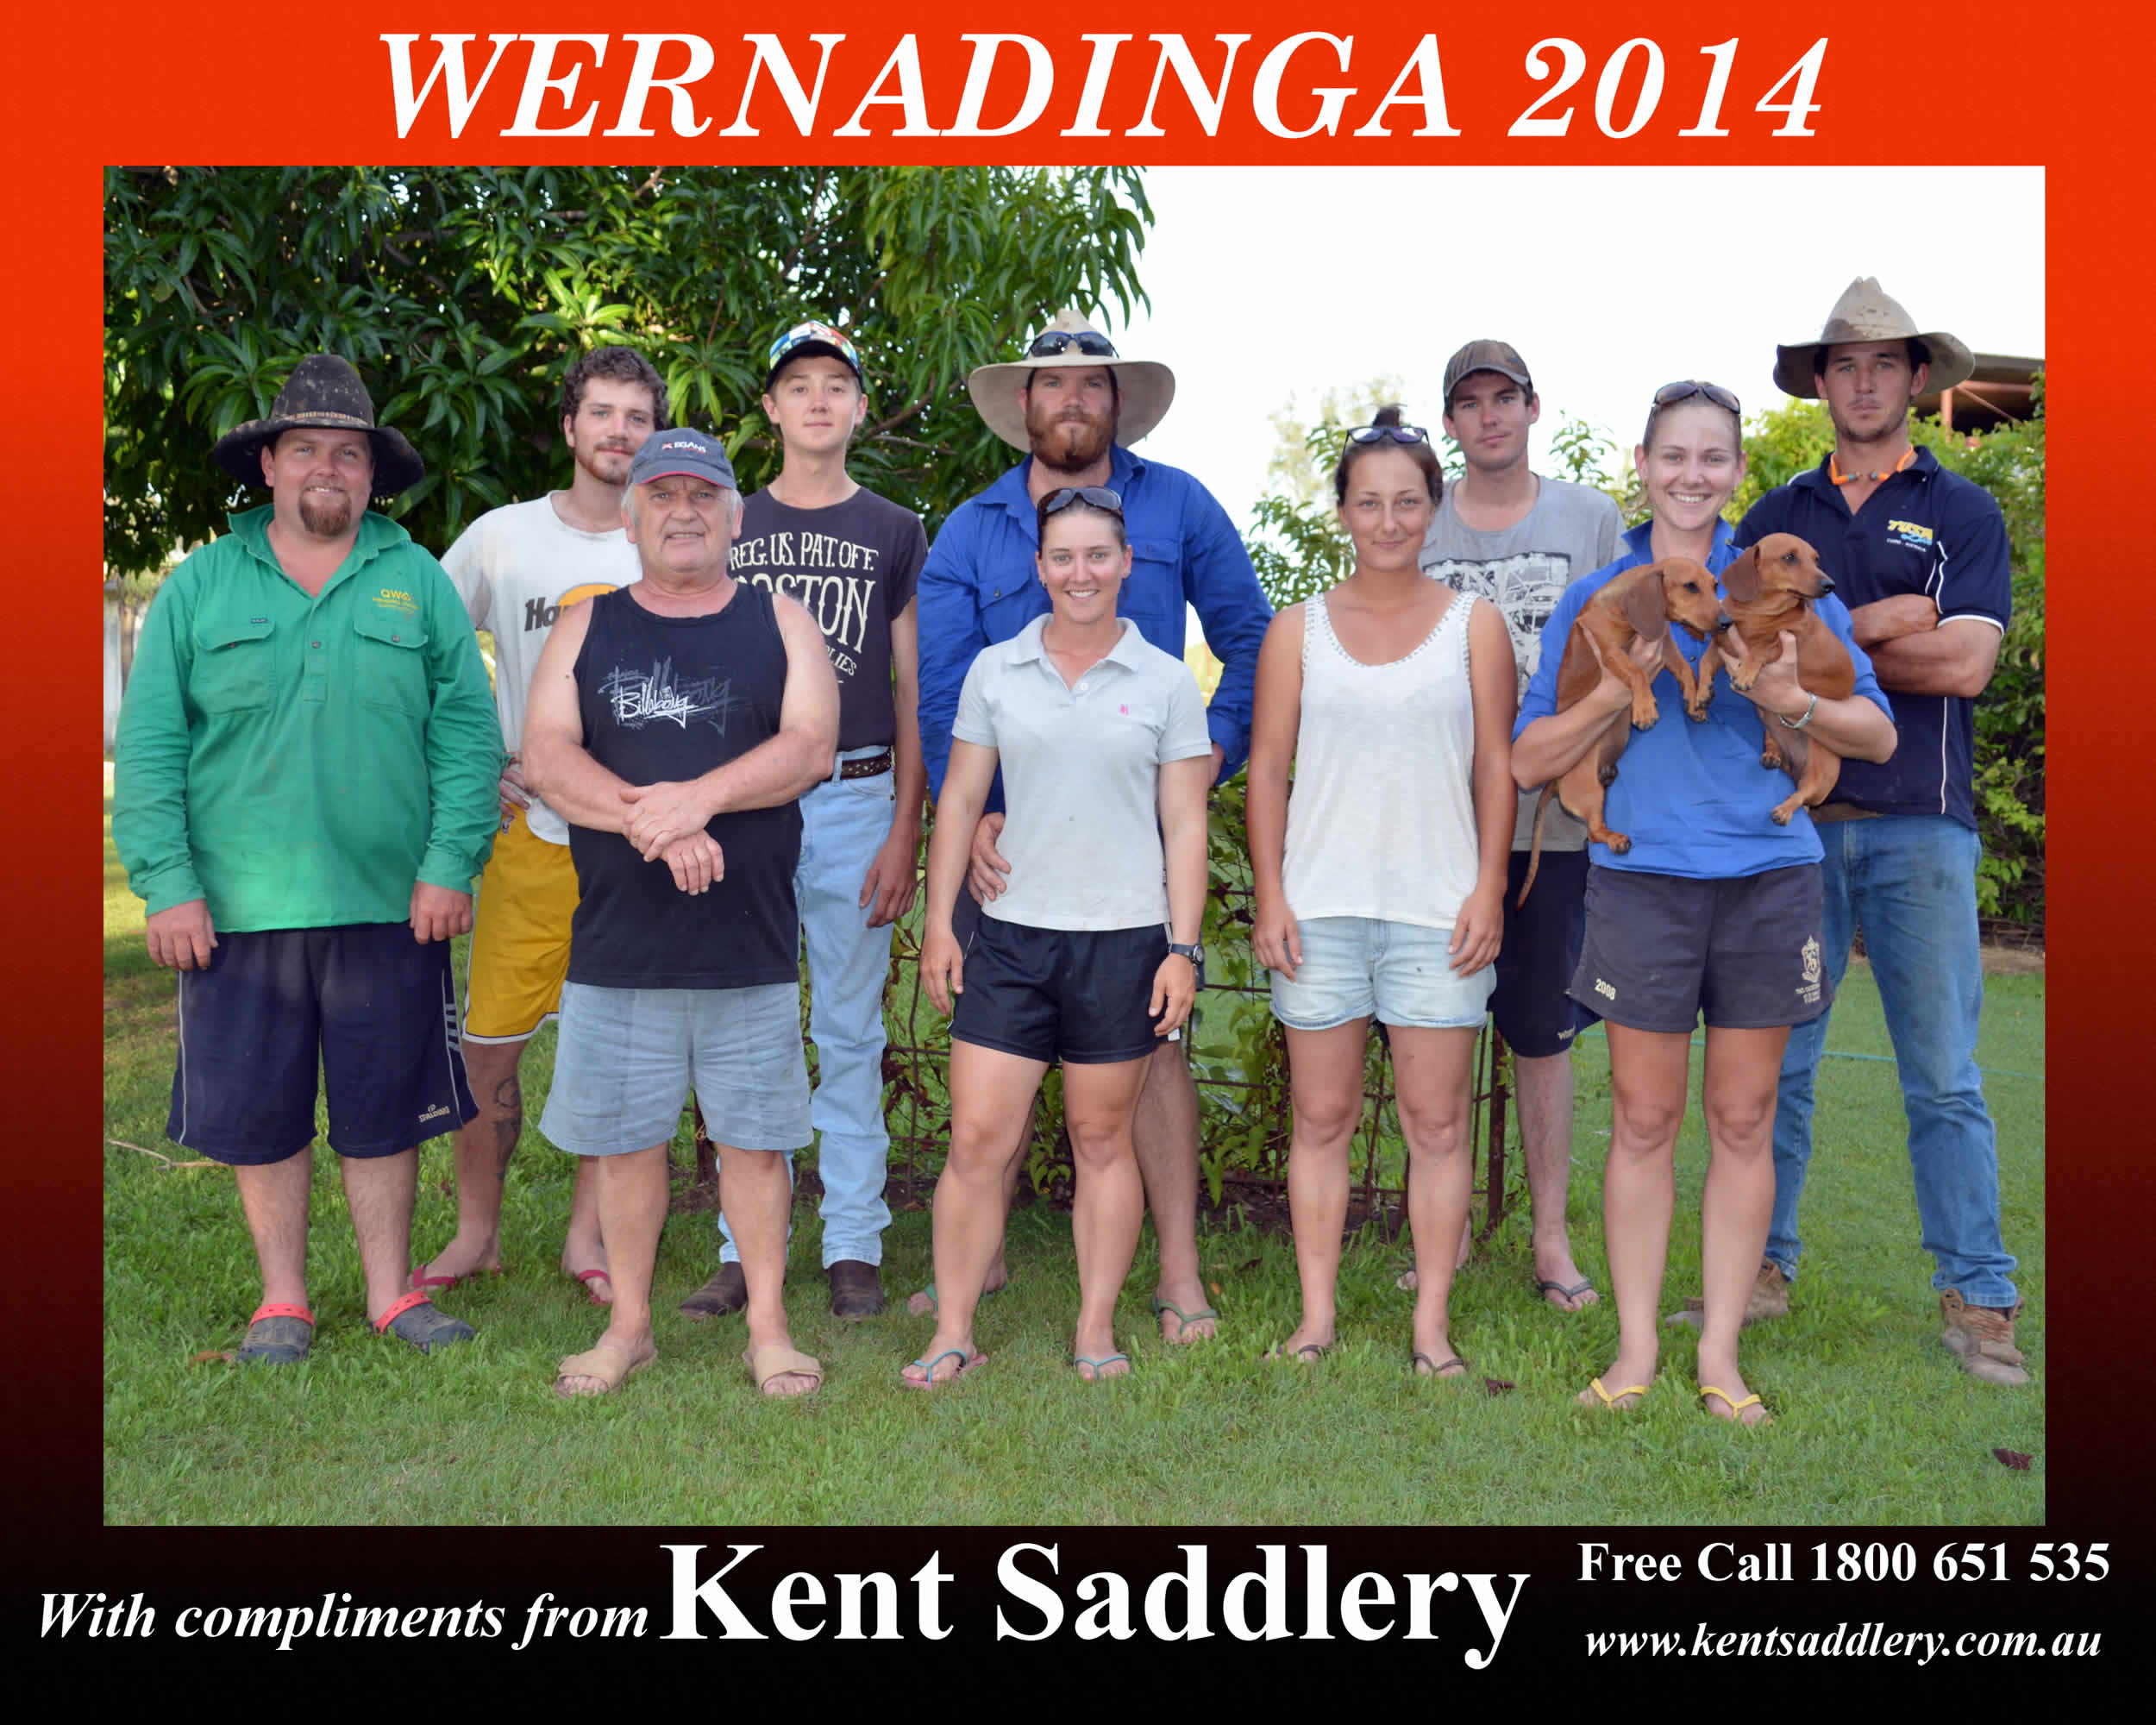 Queensland - Wernadinga 20